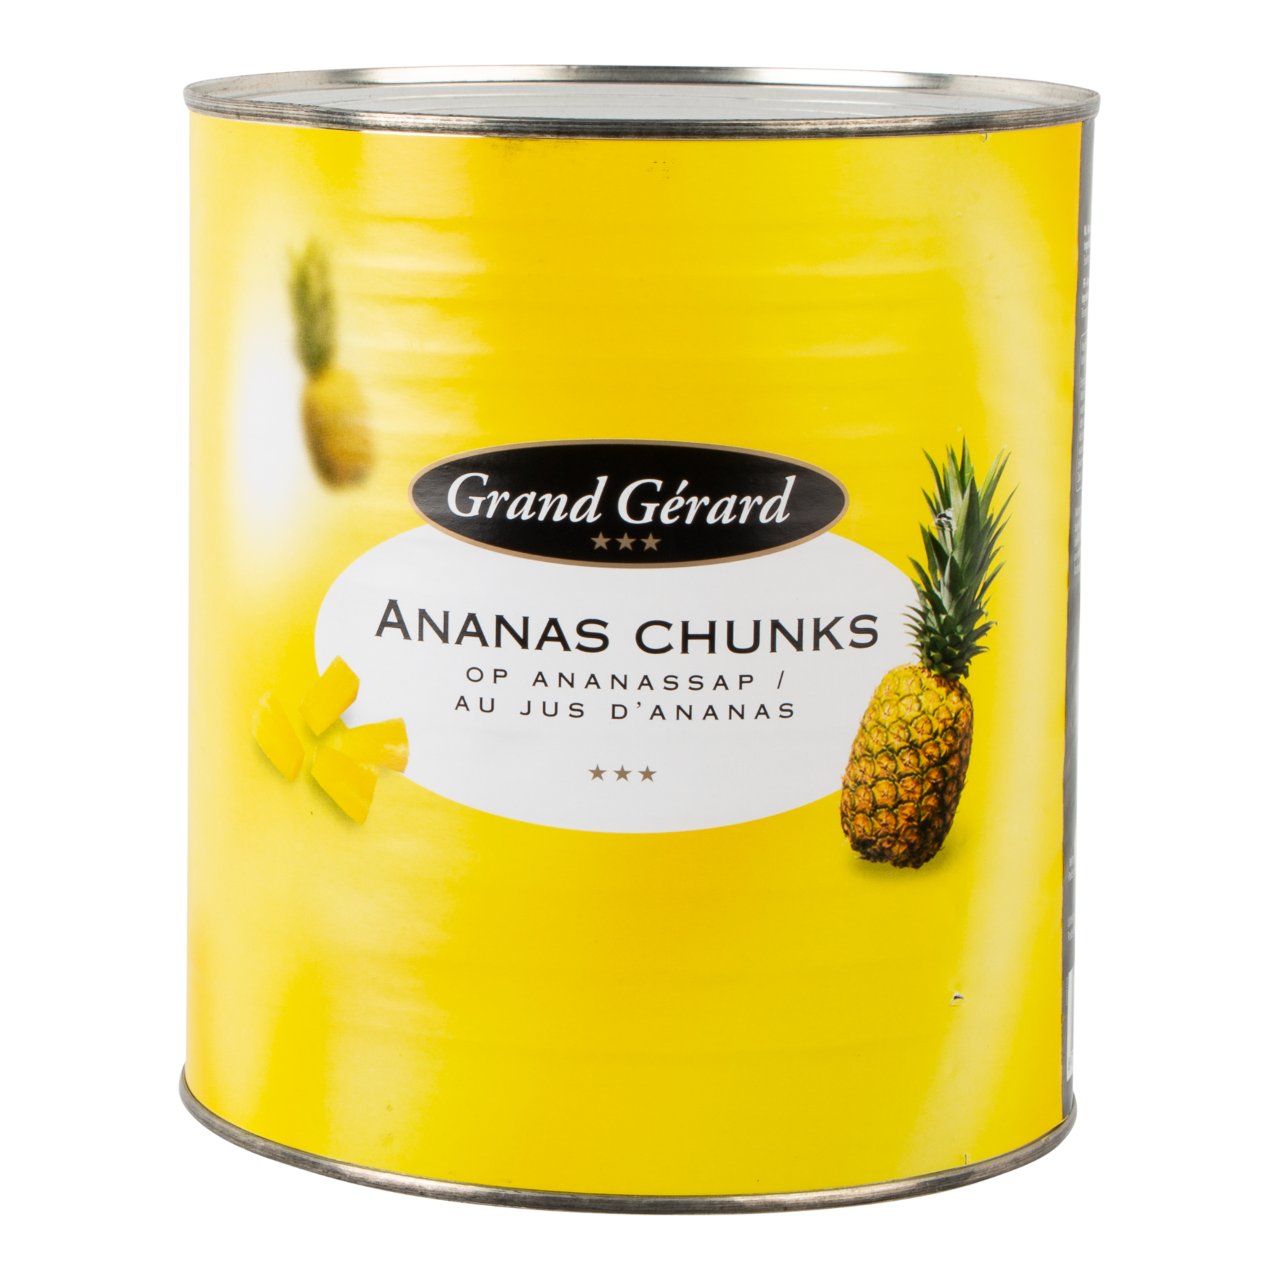 Ananas chunks op ananassap